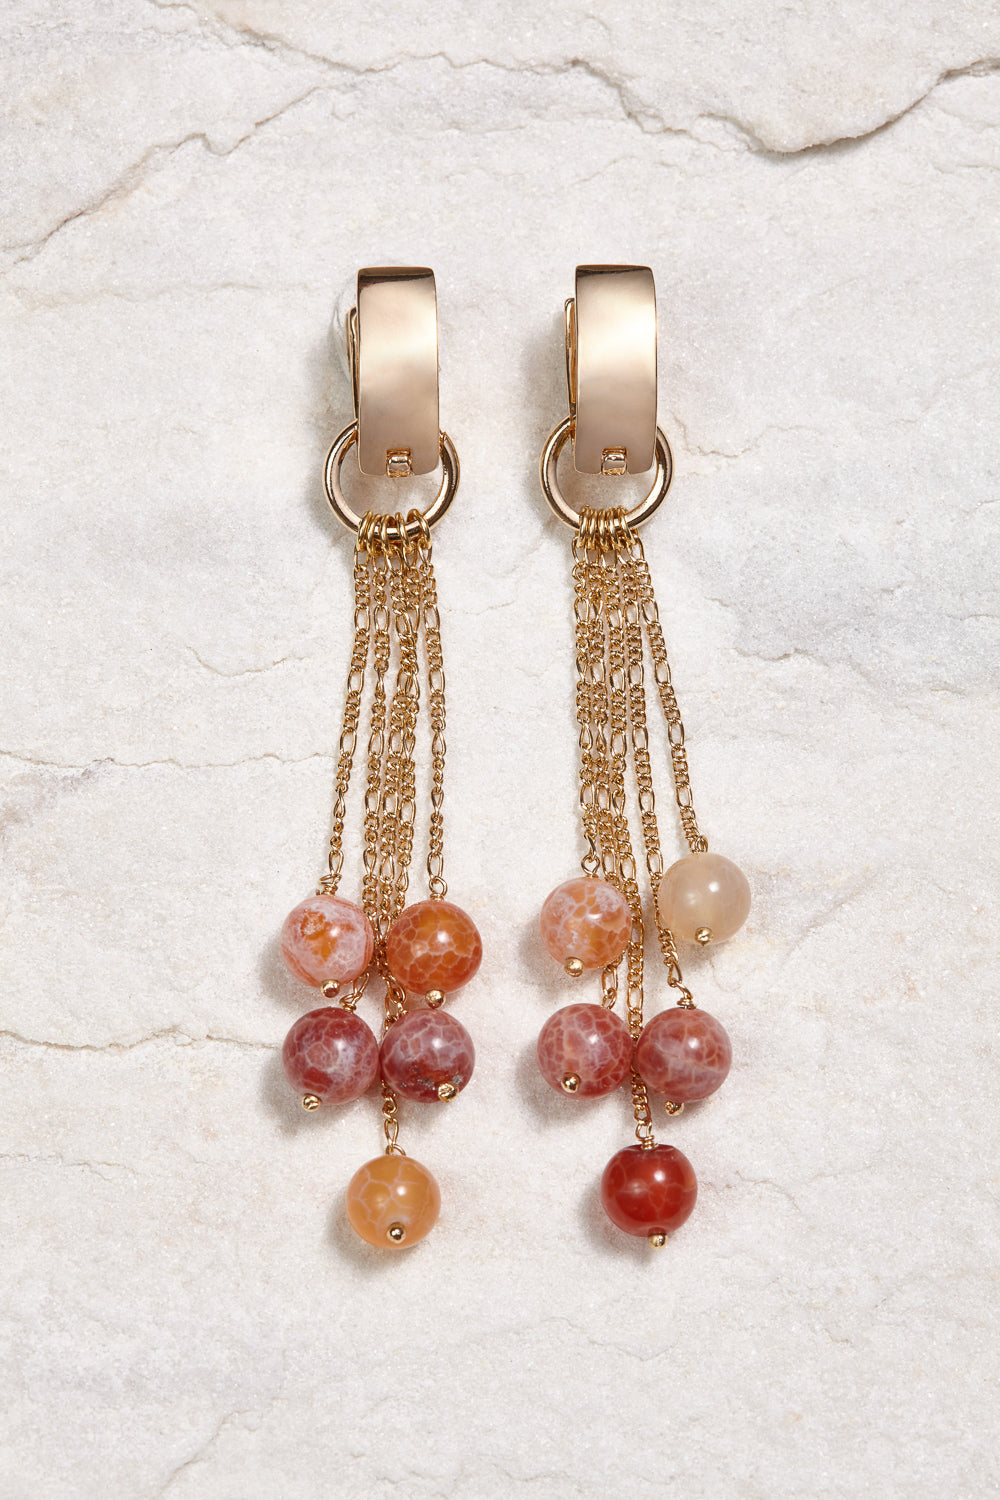 ALILA 18K dipped gold tassled red agate gemstone earrings handmade brazilian jewelry